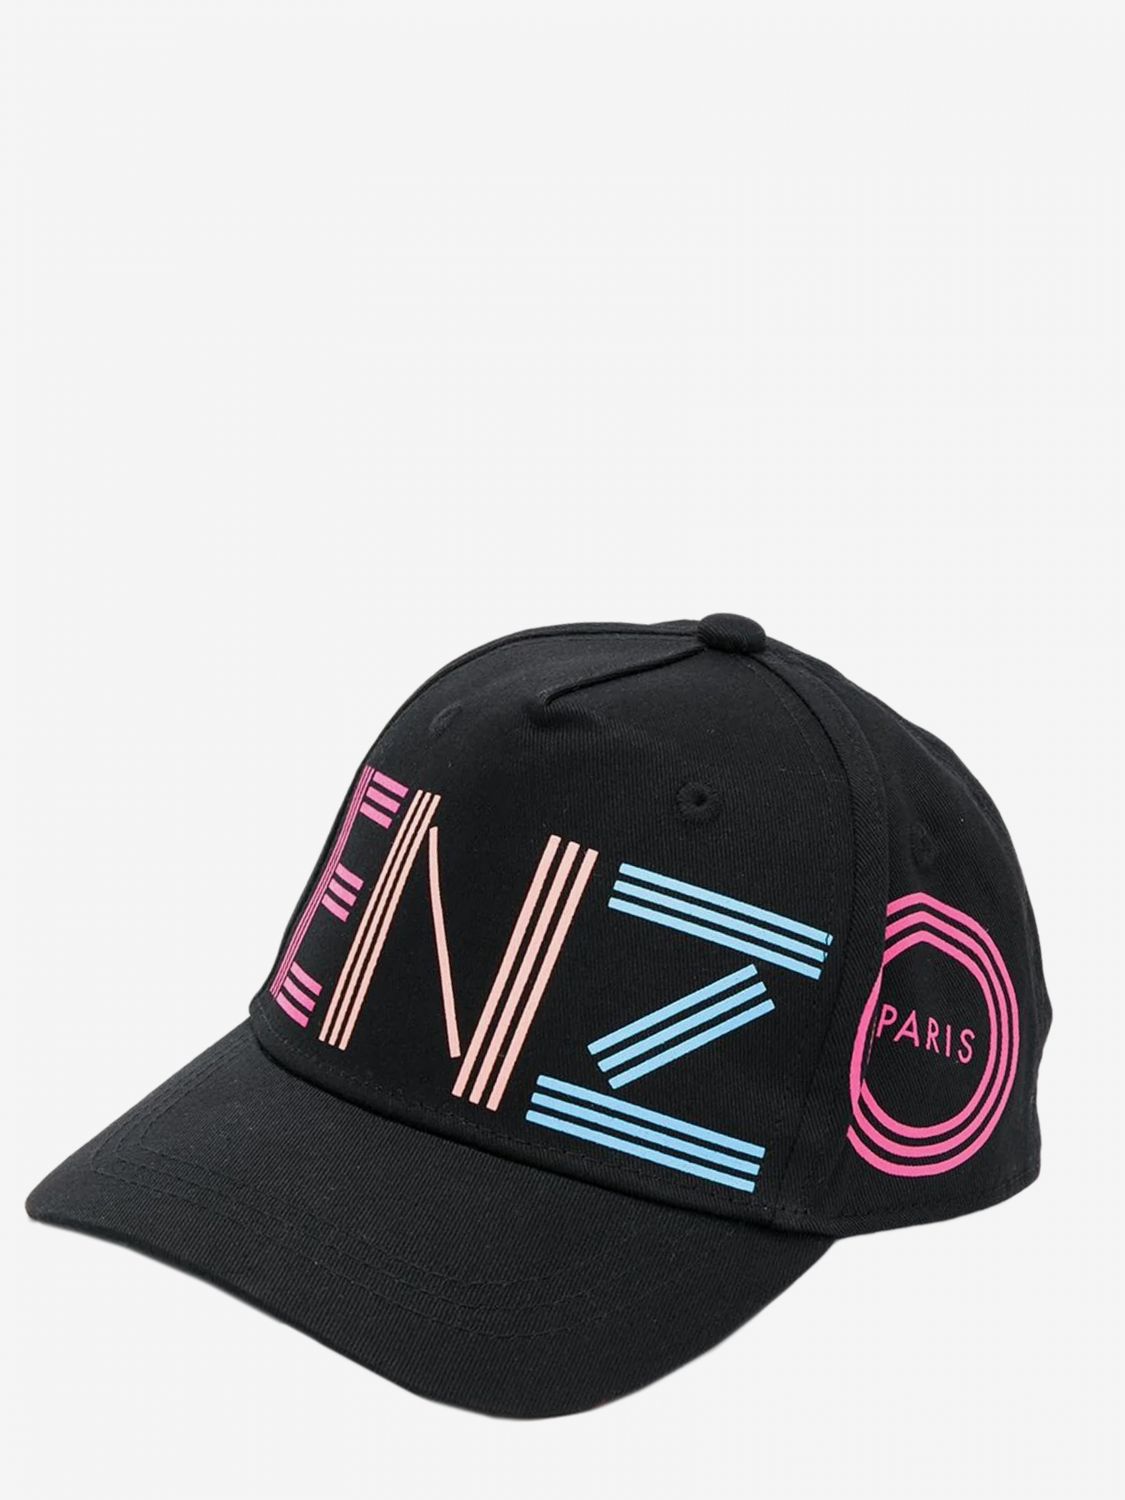 kenzo black hat